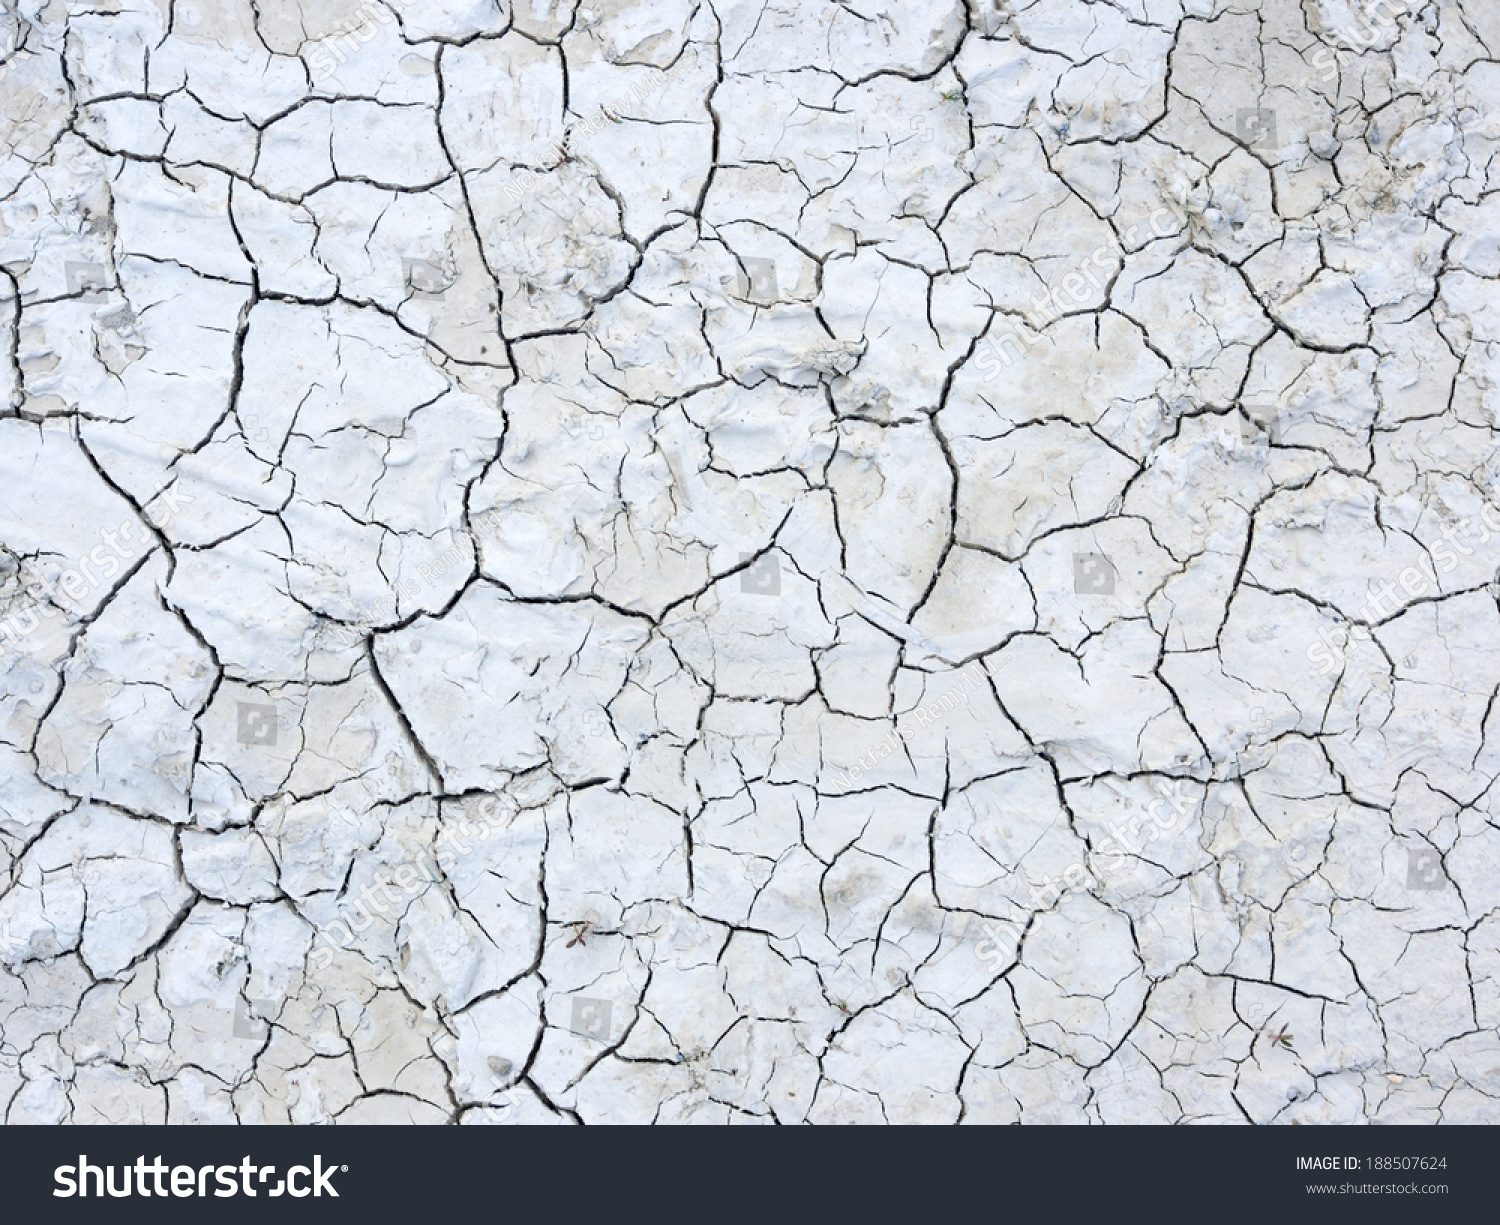 Mud cracks dryness texture background #188507624